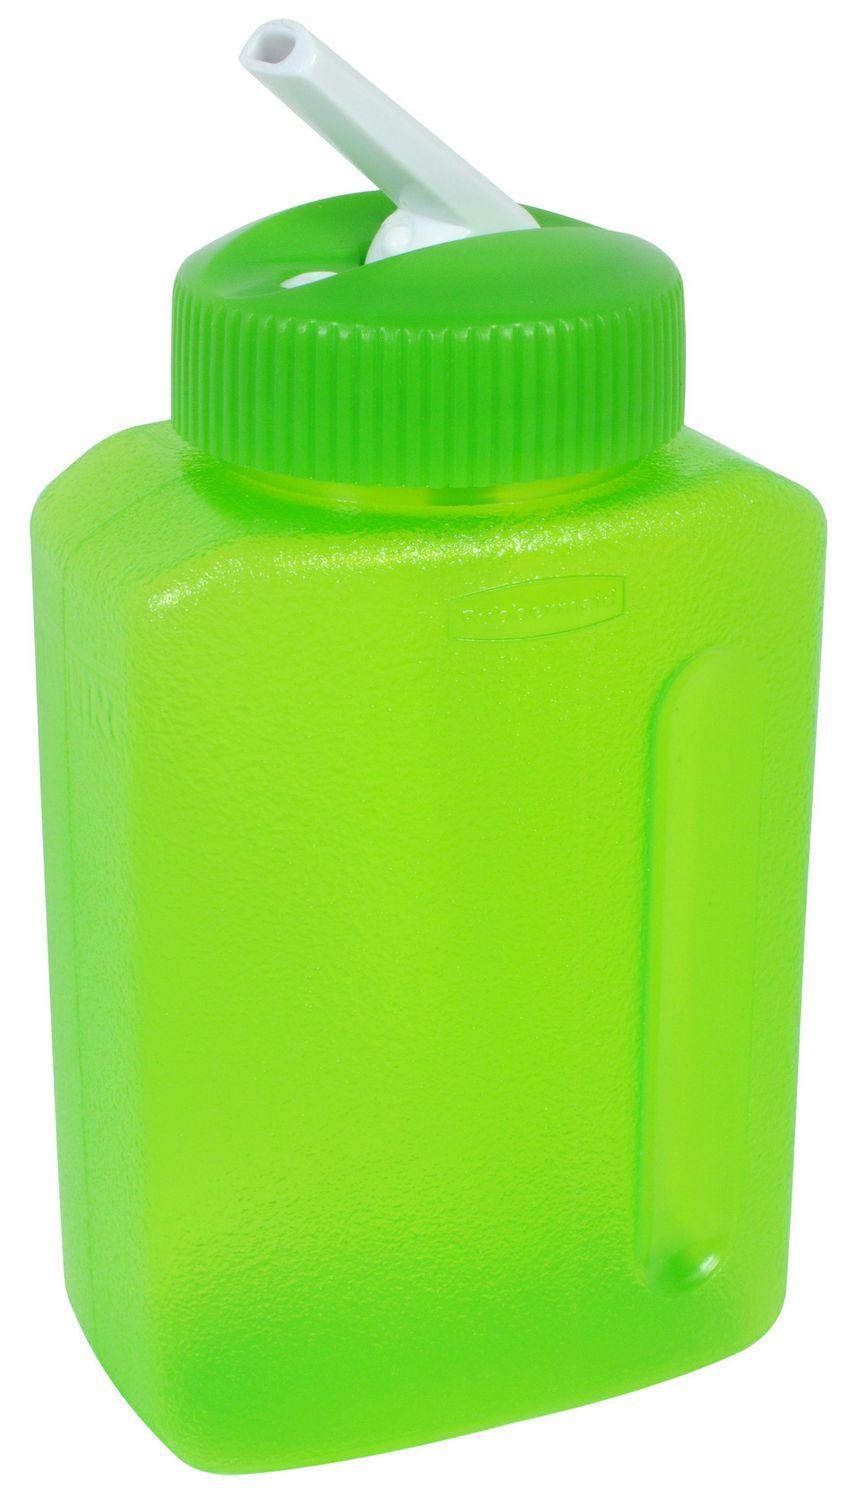  Rubbermaid 3117RDSPA Litterless Juice Boxes 8.5 oz. : Health &  Household